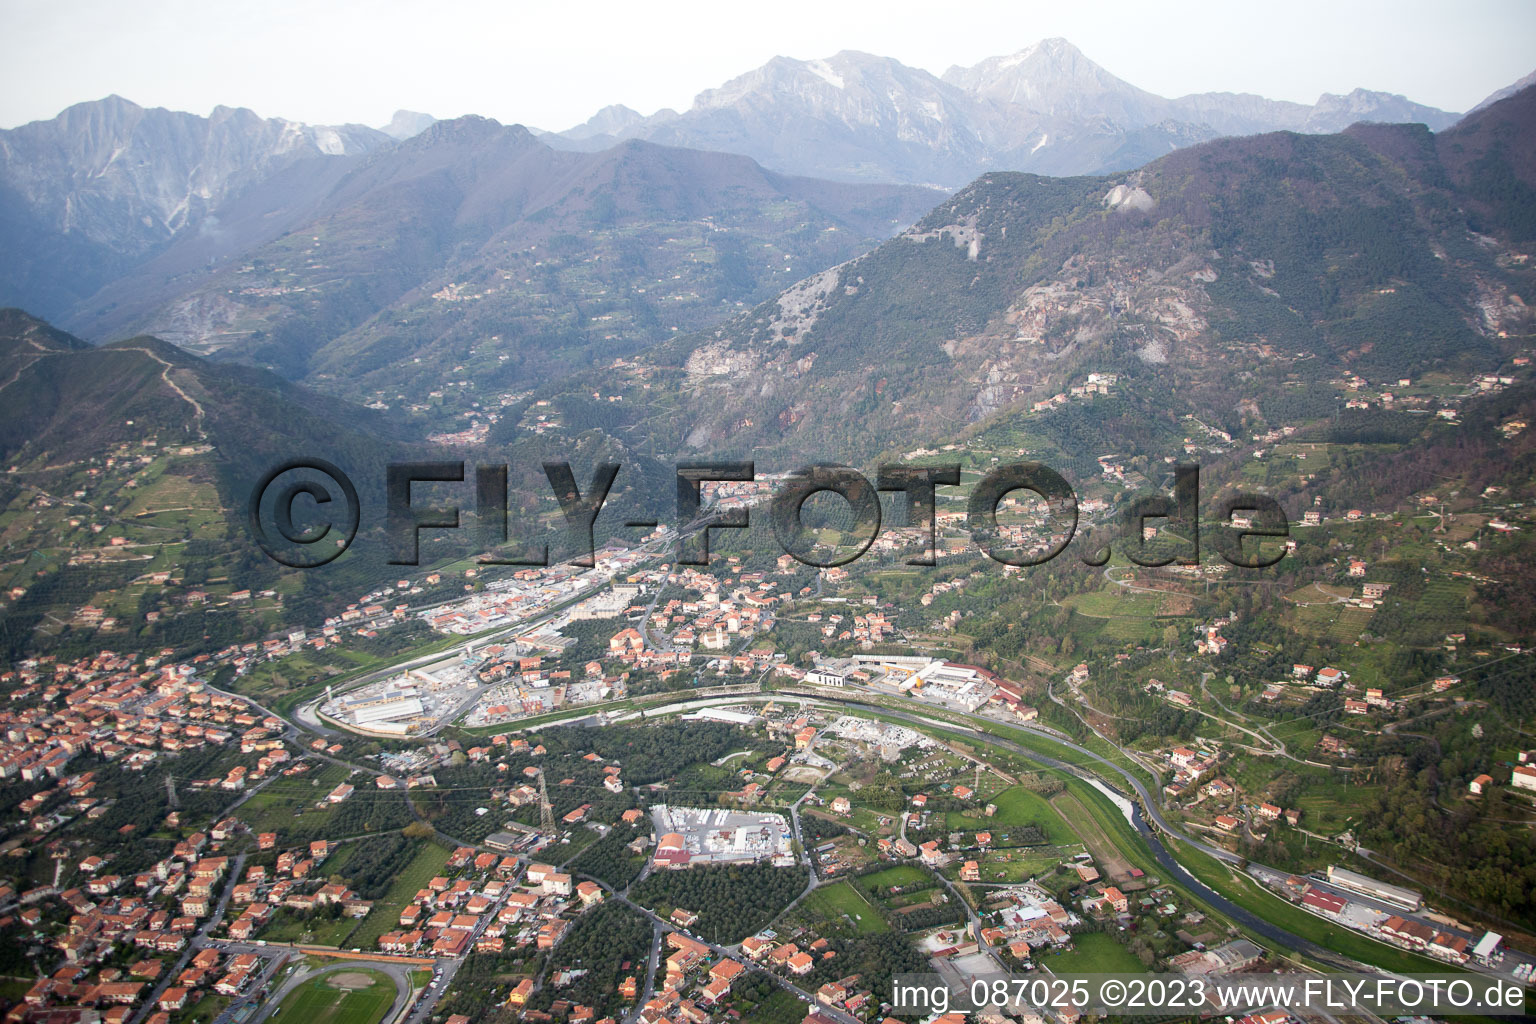 Luftbild von Ripa(I-Toskana) in Ripa-Pozzi-Querceta-Ponterosso im Bundesland Toscana, Italien